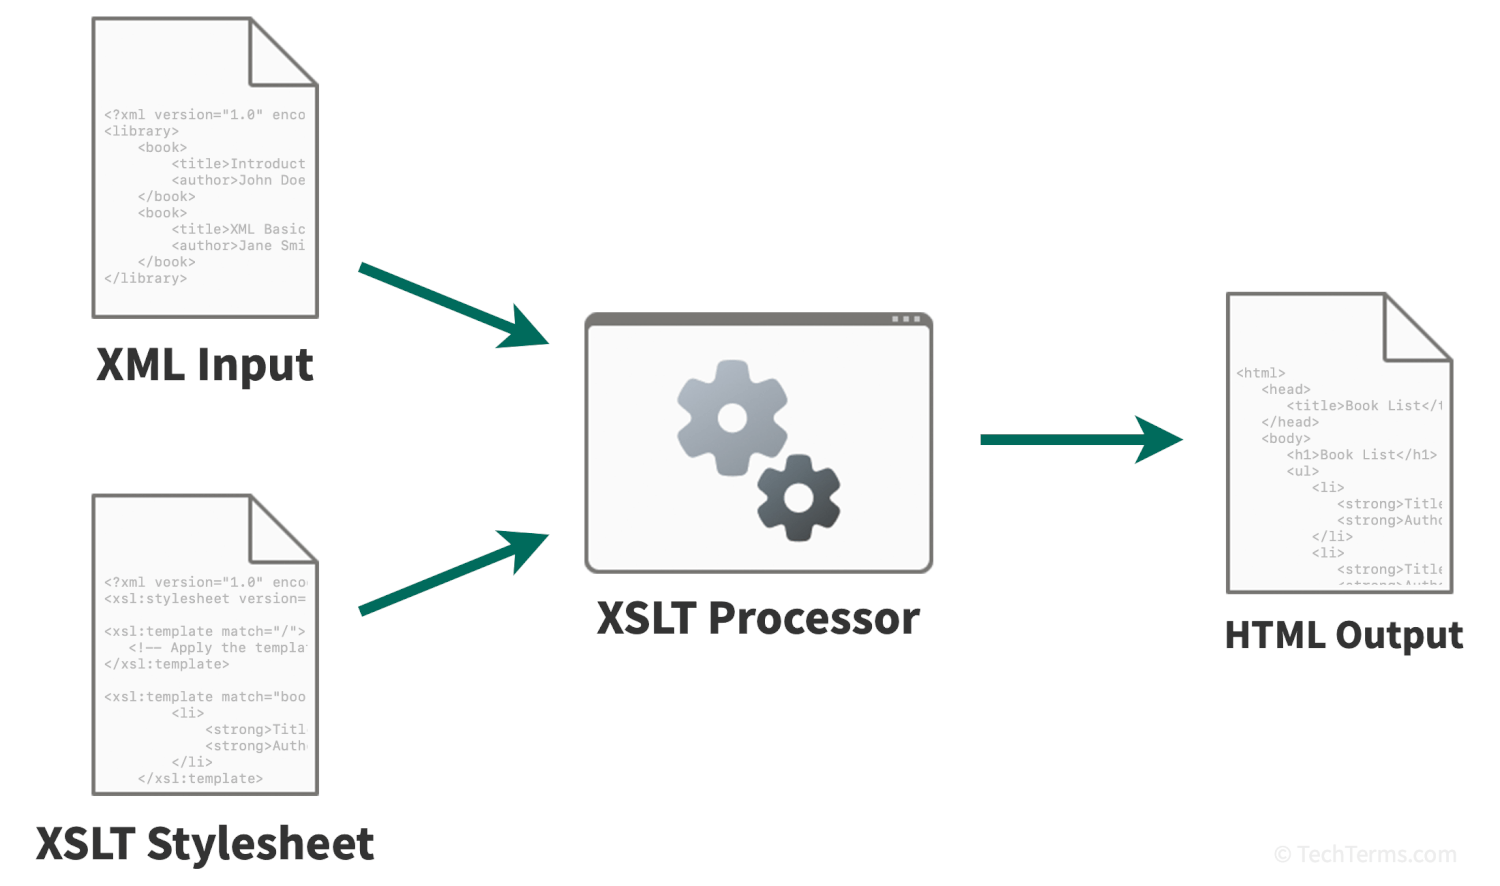 An XML file and XSLT stylesheet run through a XSLT processor to produce an output file